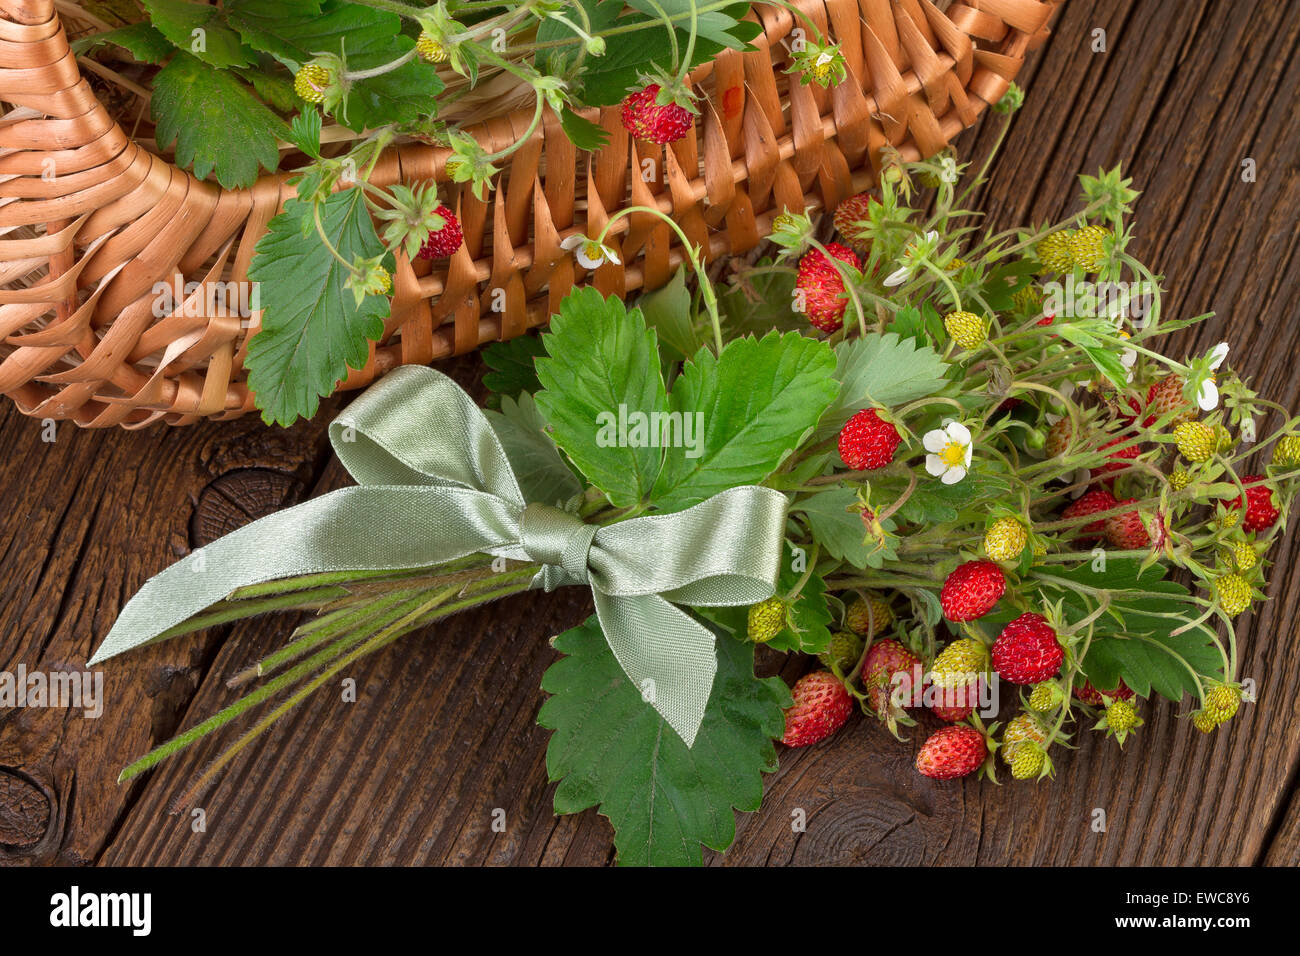 woodland strawberries on wooden background Stock Photo